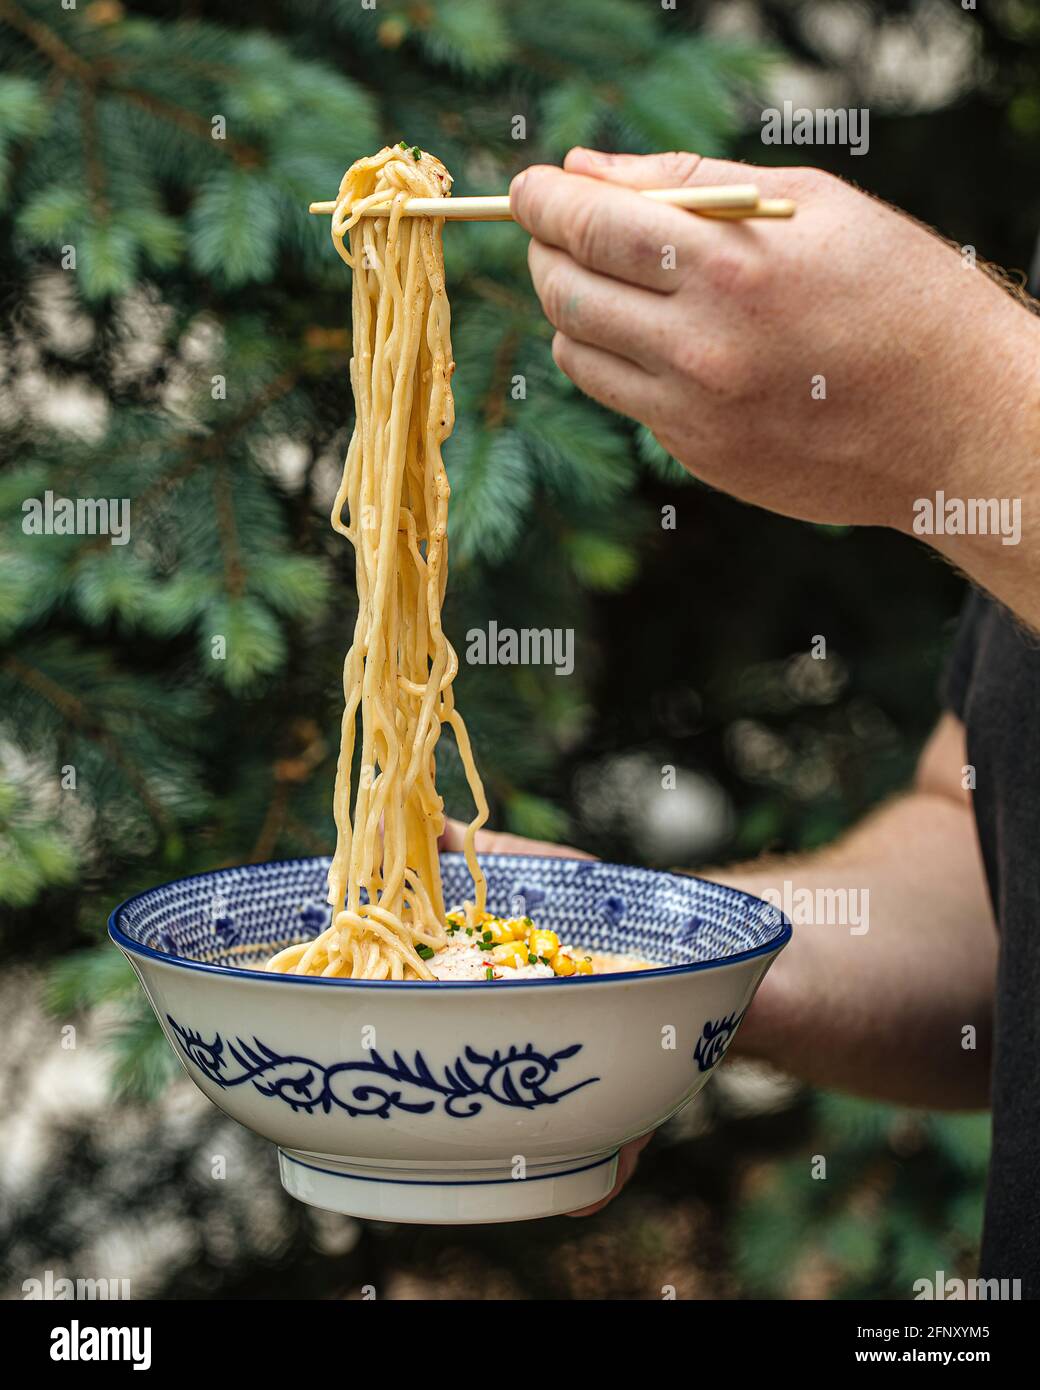 Eating japanese ramen noodles soup with chopsticks Stock Photo